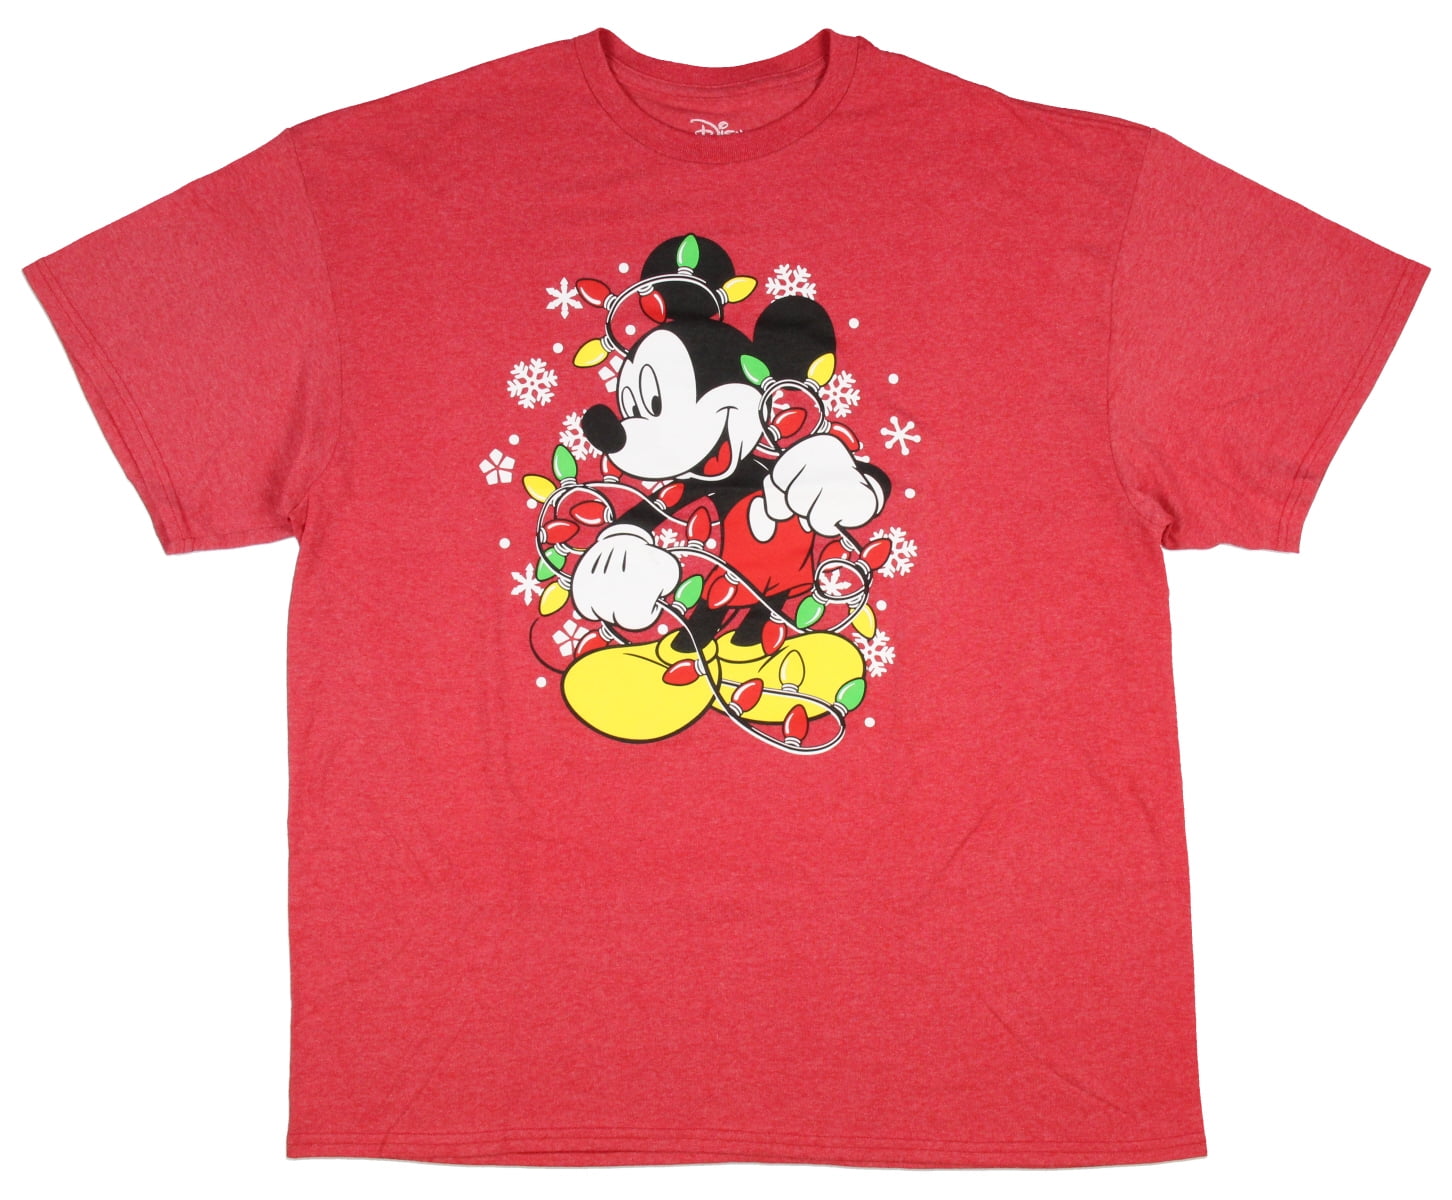 Disney Santa Mickey and Minnie Mouse Holiday T-Shirt